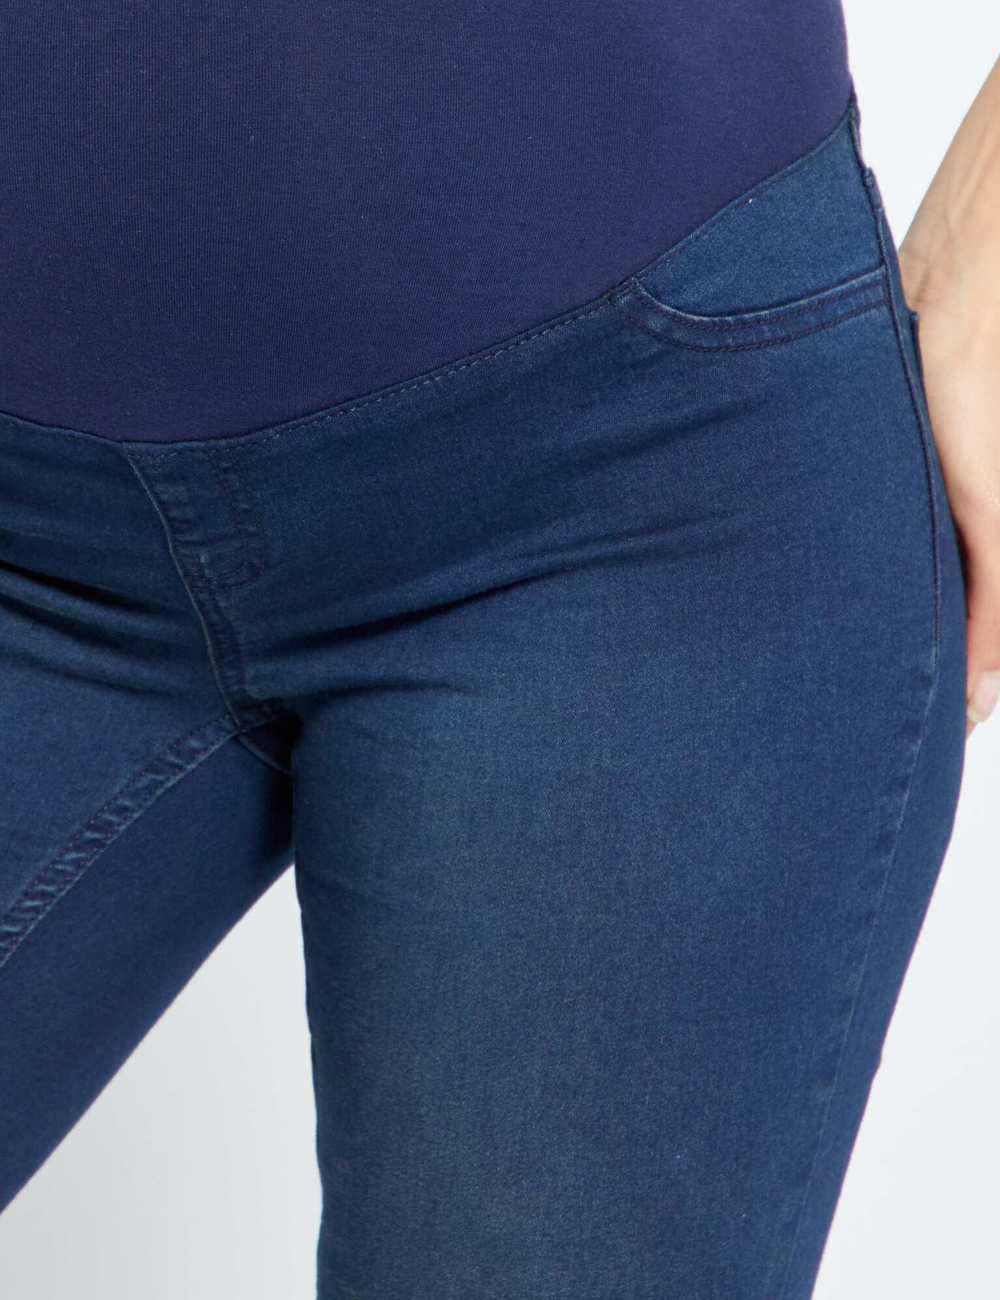 Buy Skinny maternity jeans Online in Dubai & the UAE